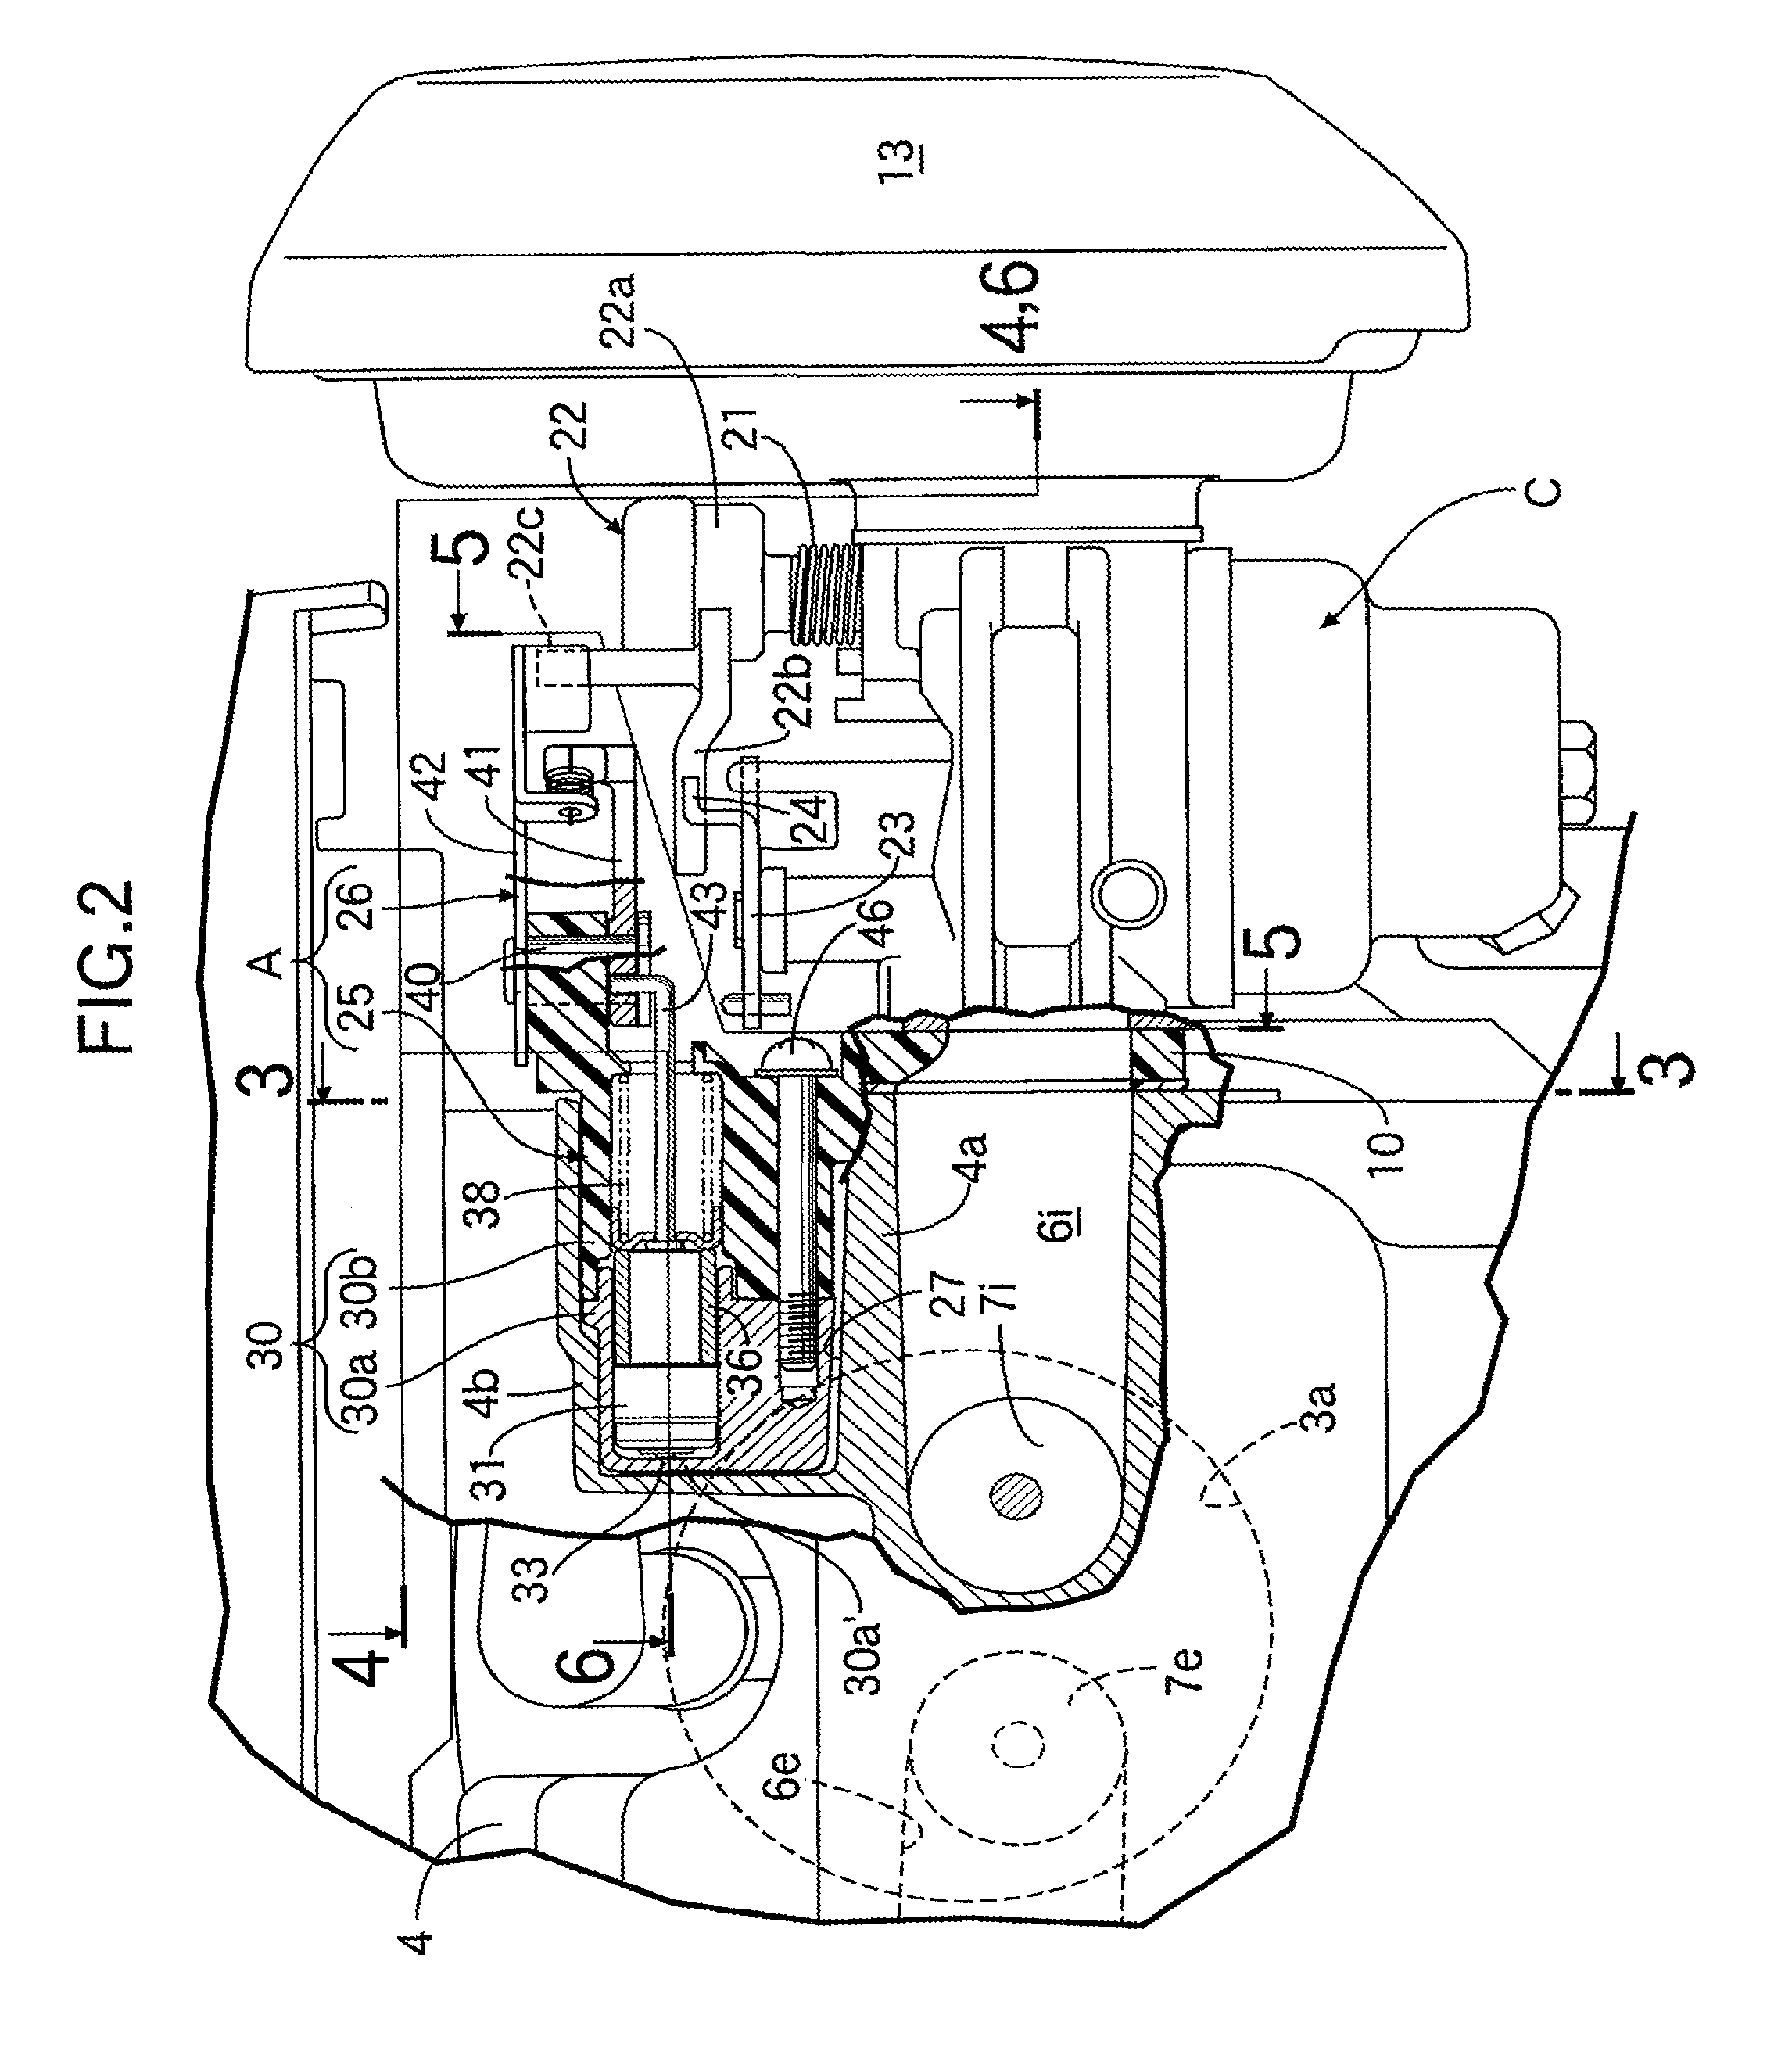 Carburetor control system